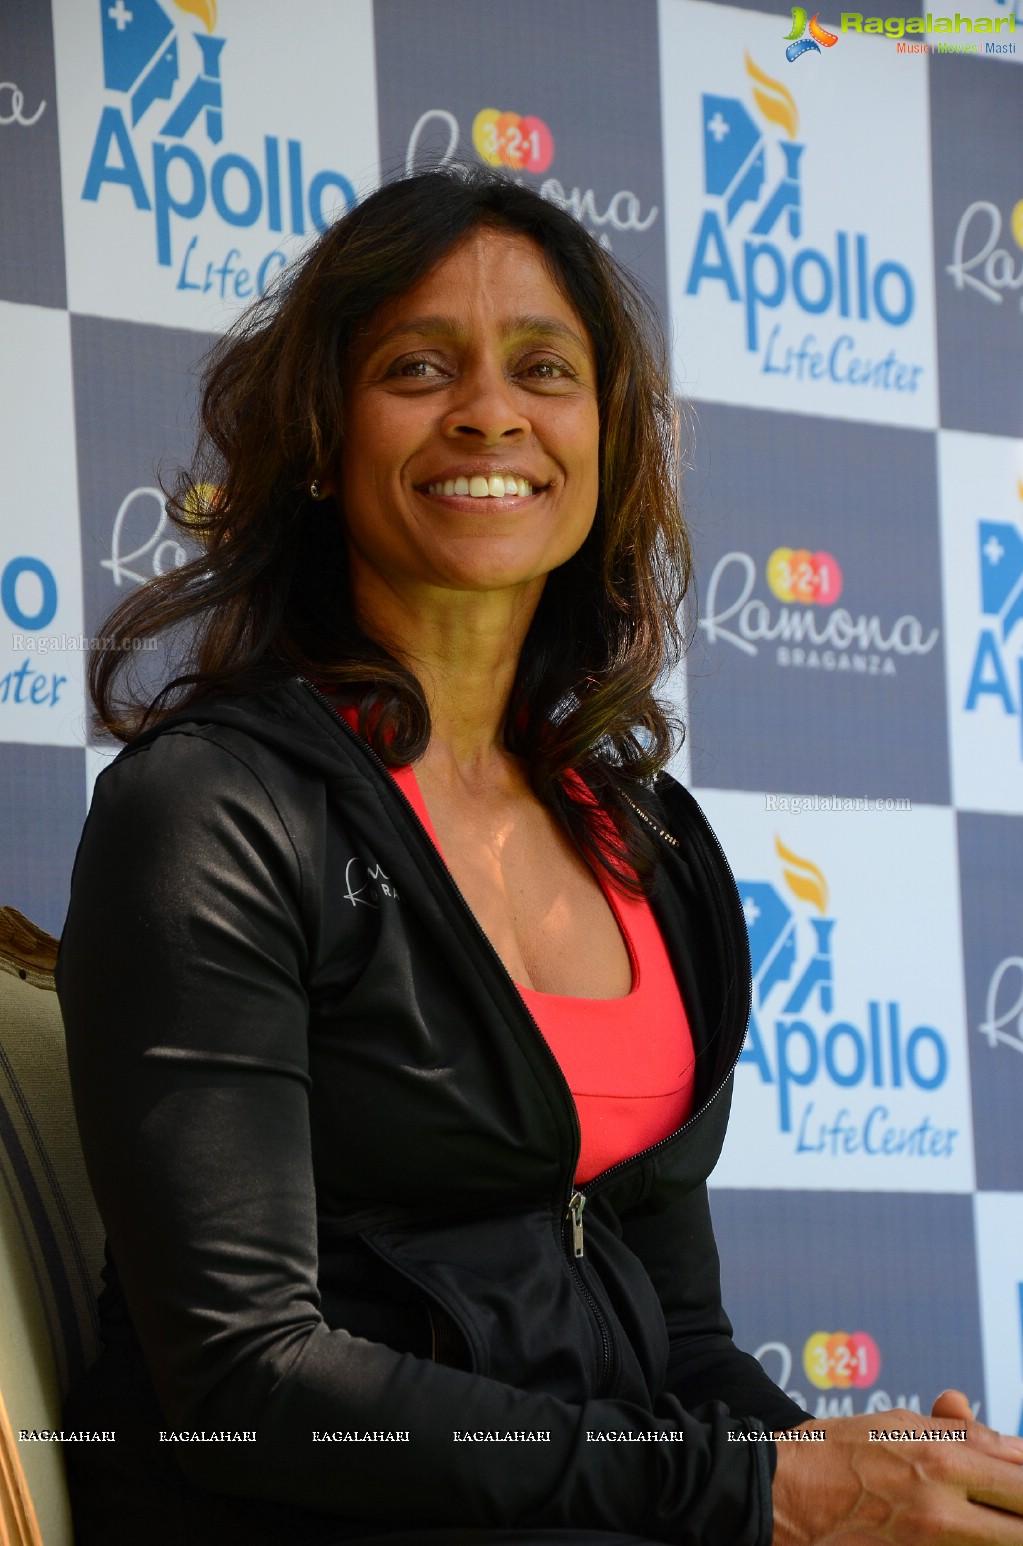 Hollywood's Fitness Expert Ramona Braganza at Apollo Life Centre Hyderabad